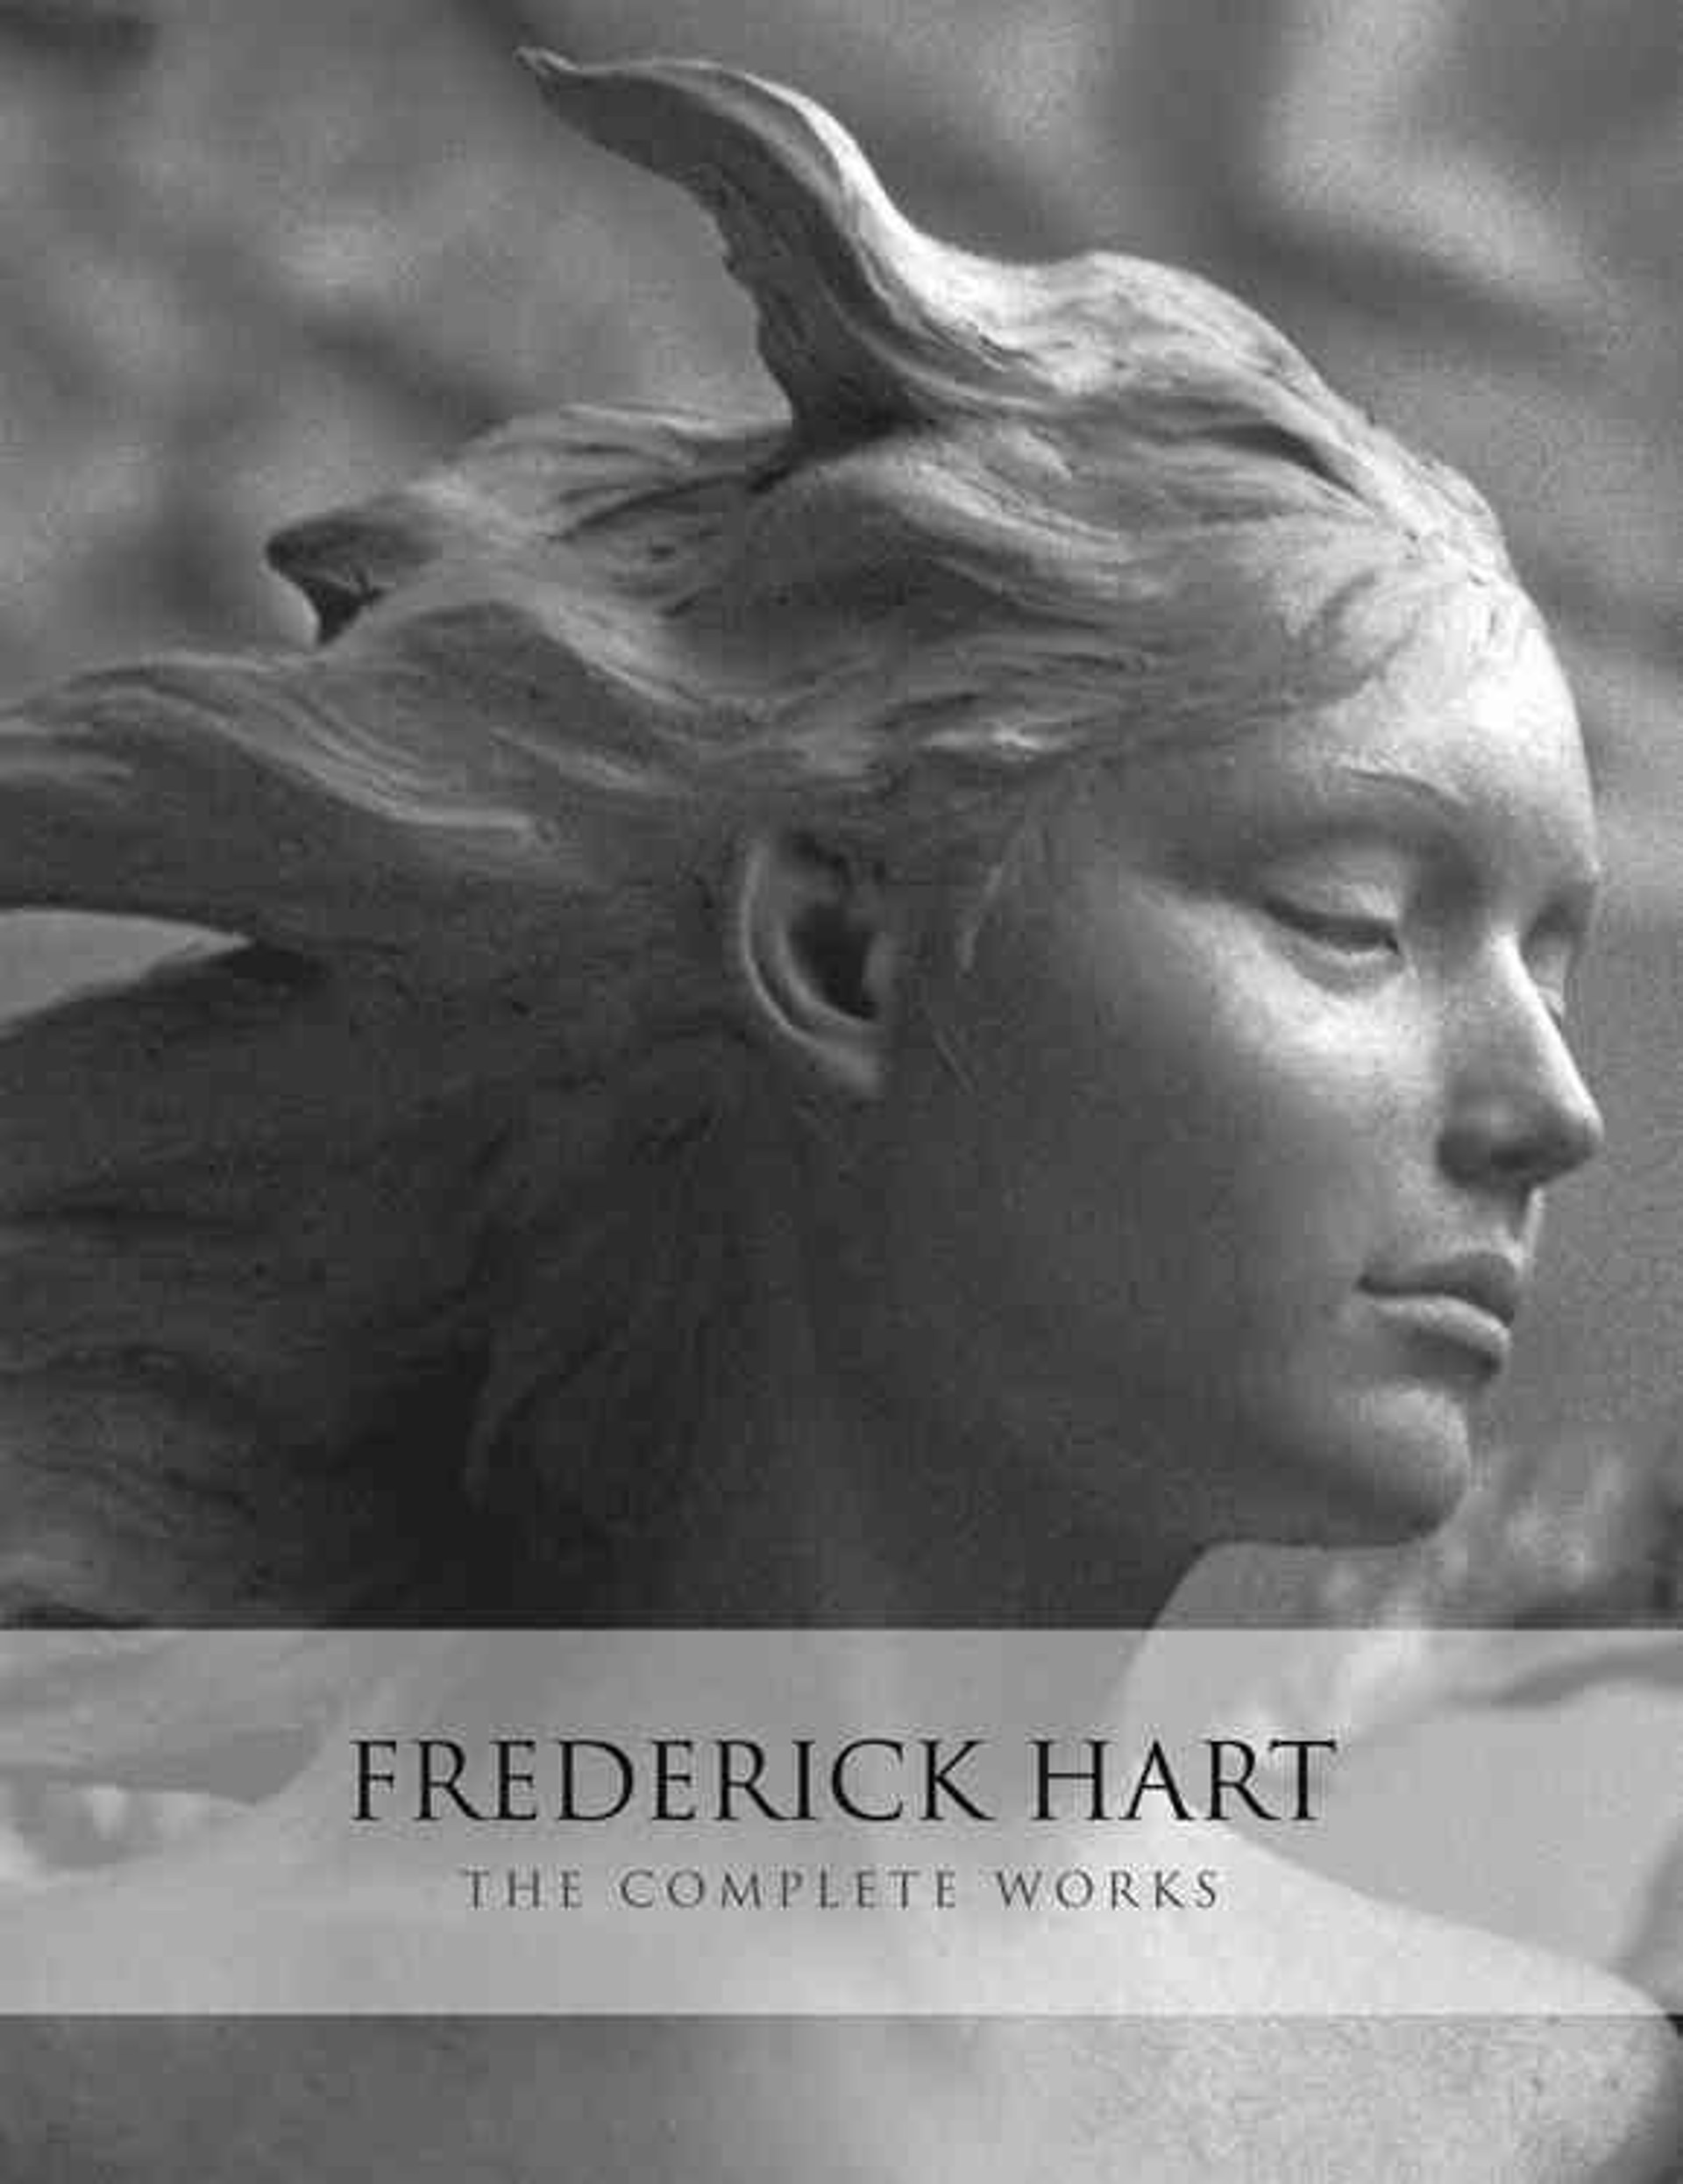 Fredrick Hart The Complete Works by Fredrick Hart